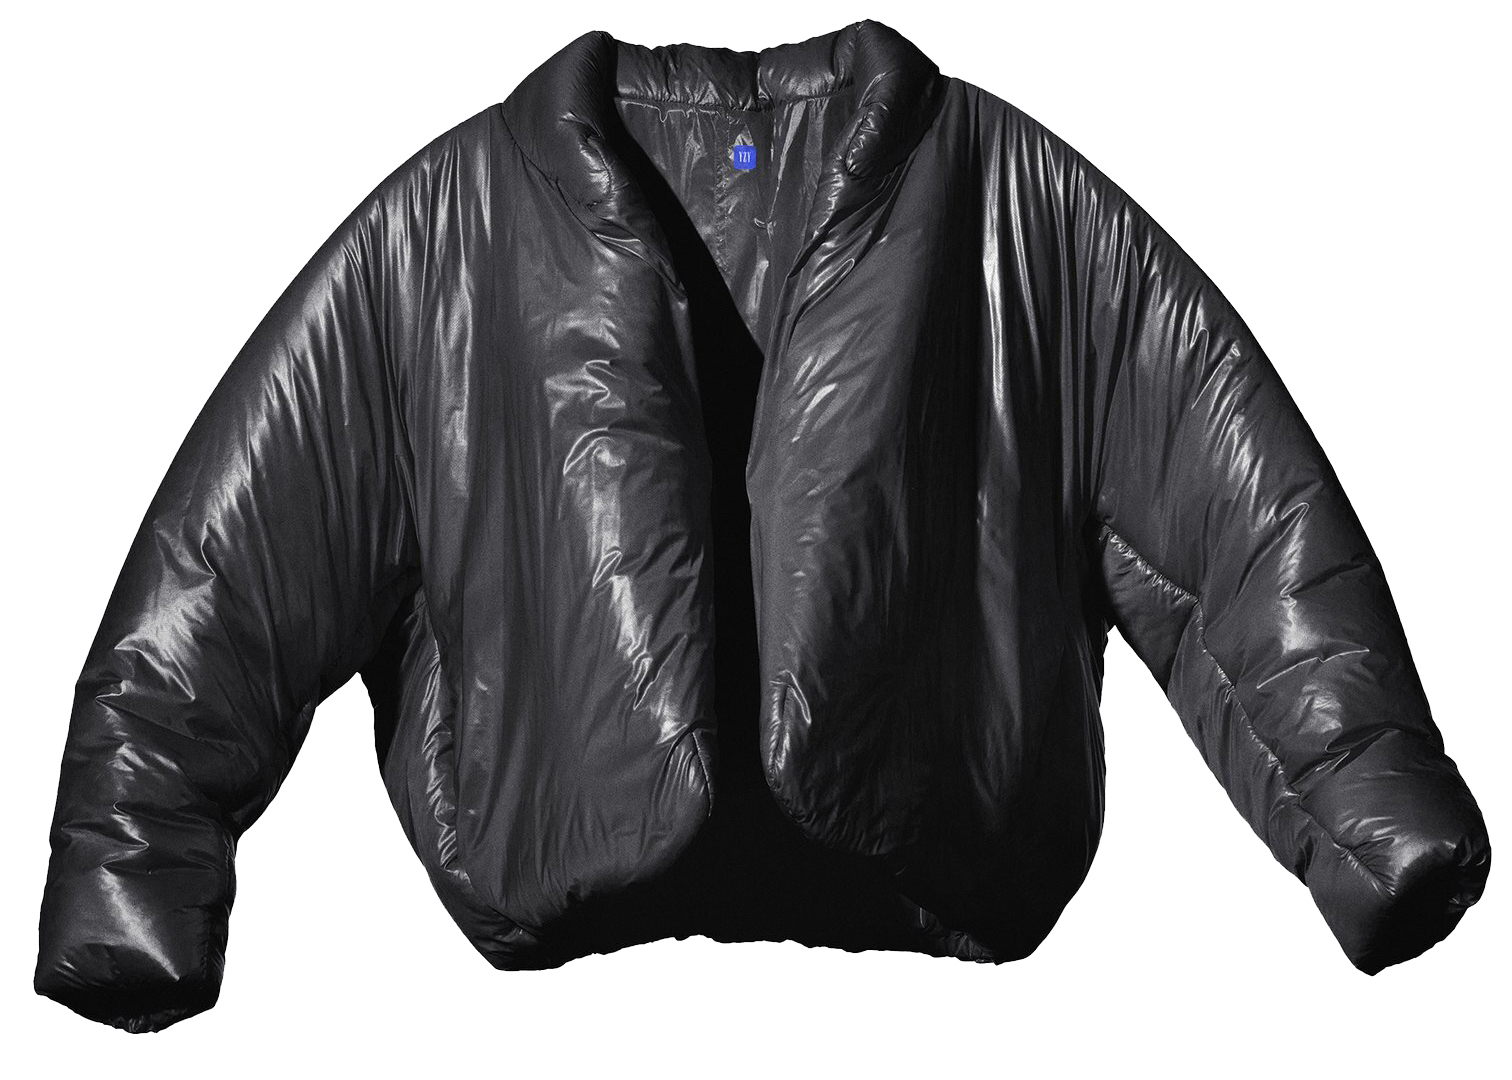 XL Yeezy Gap Round Jacket Black YZY ダウンジャケット ジャケット/アウター メンズ 高質